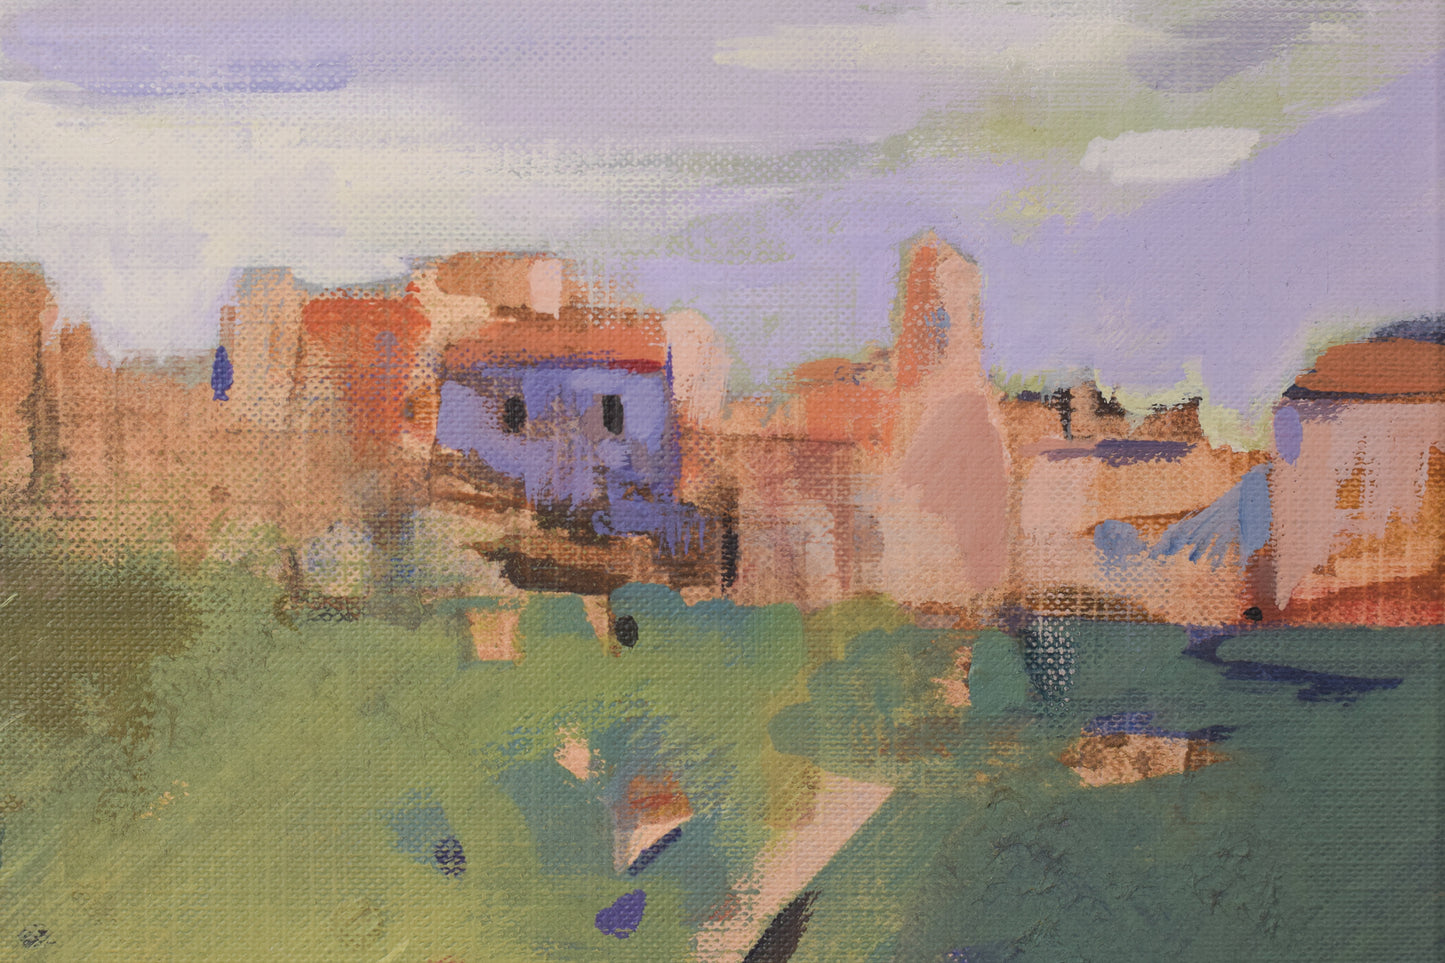 Post Impressionist Landscape with Village